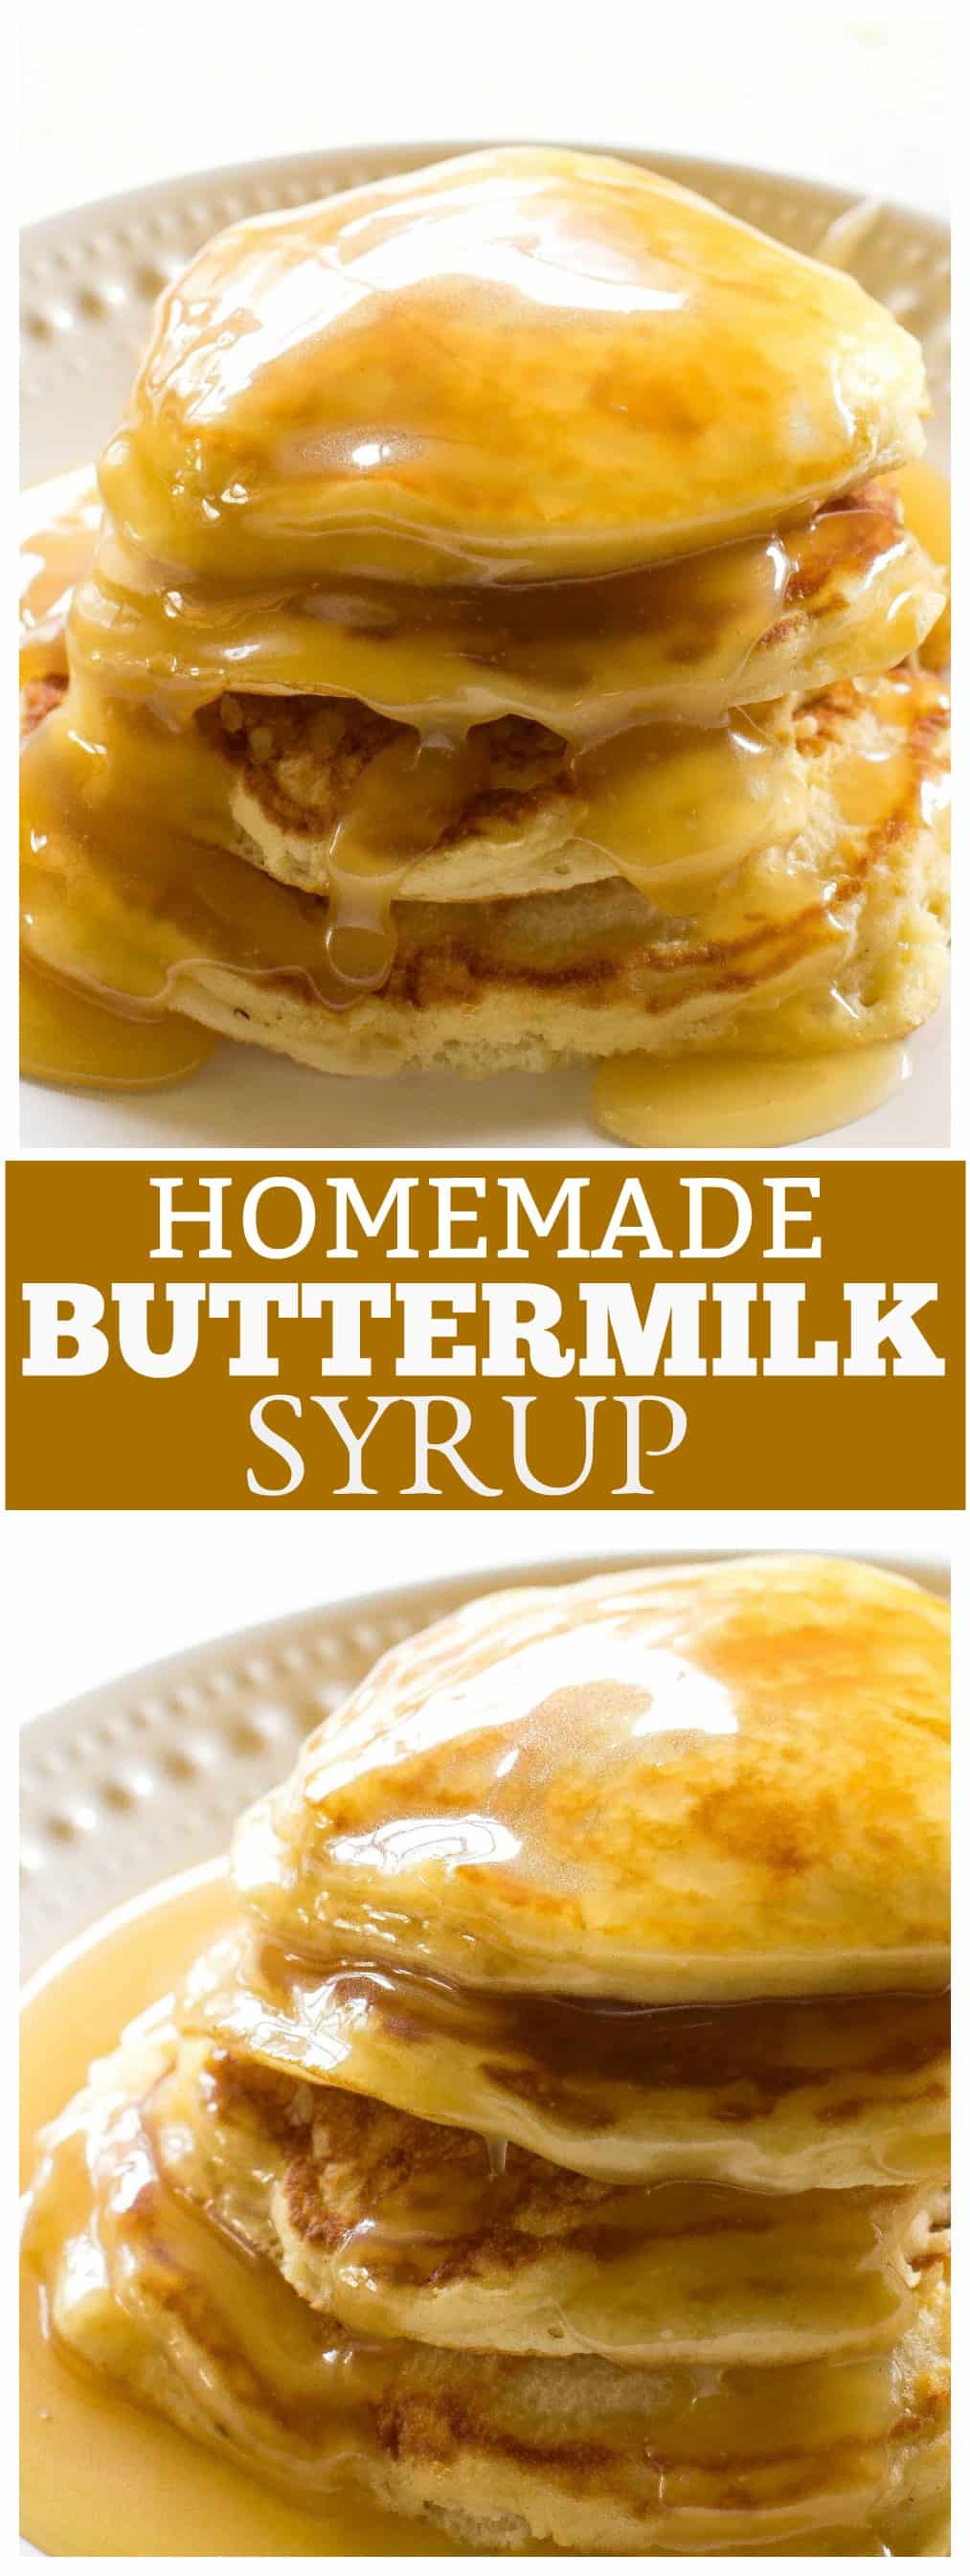 Homemade Breakfast Syrup